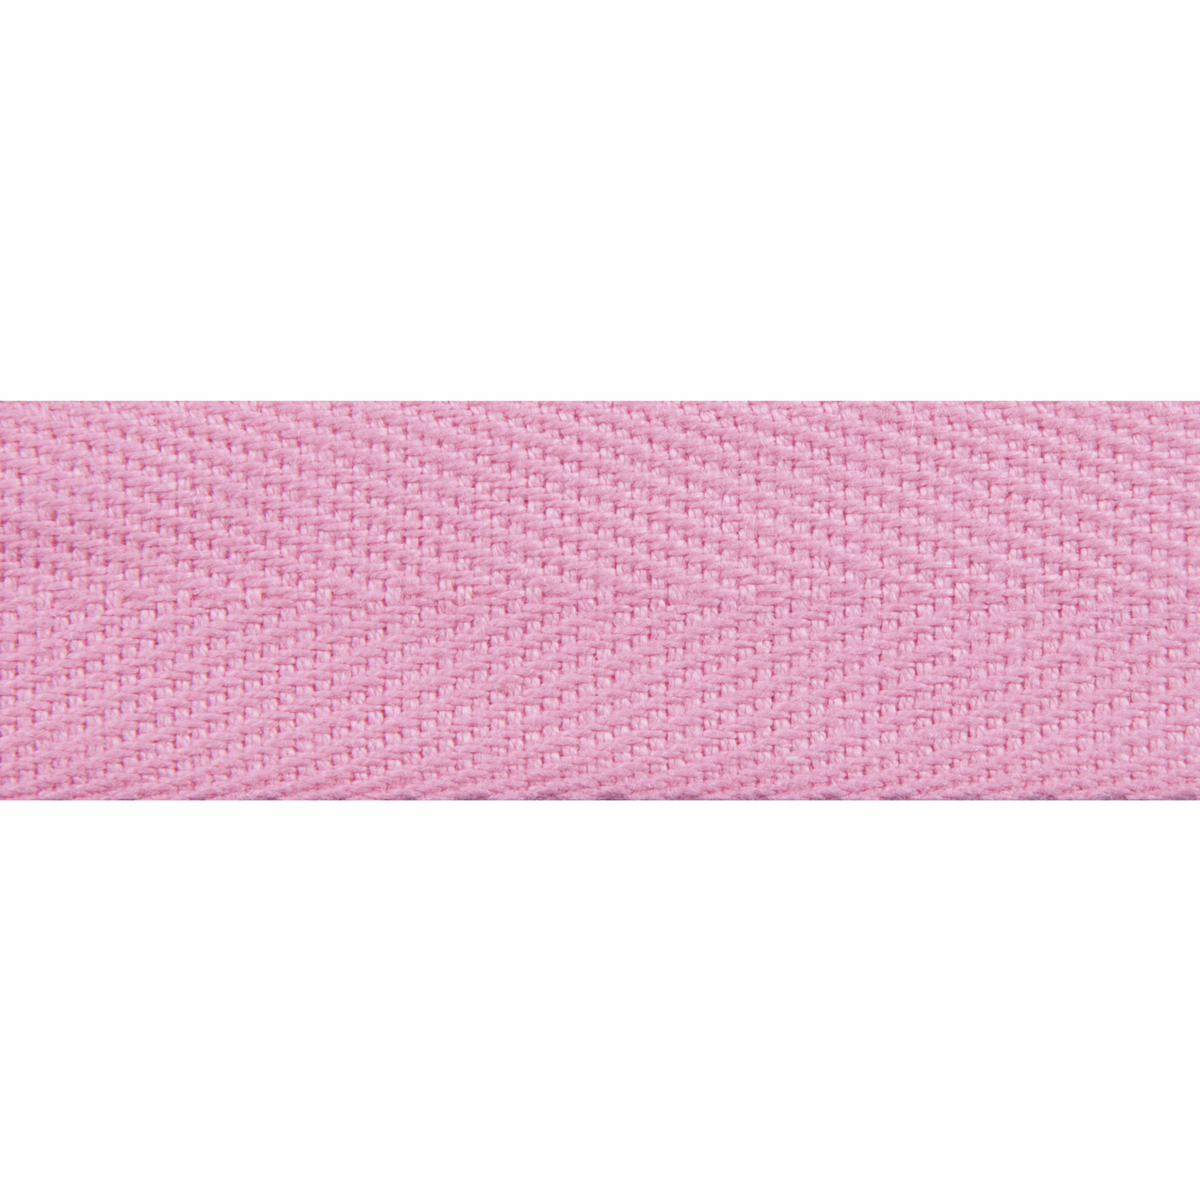 Herringbone Cotton Tape Pink 20mm Wide Price Per Metre